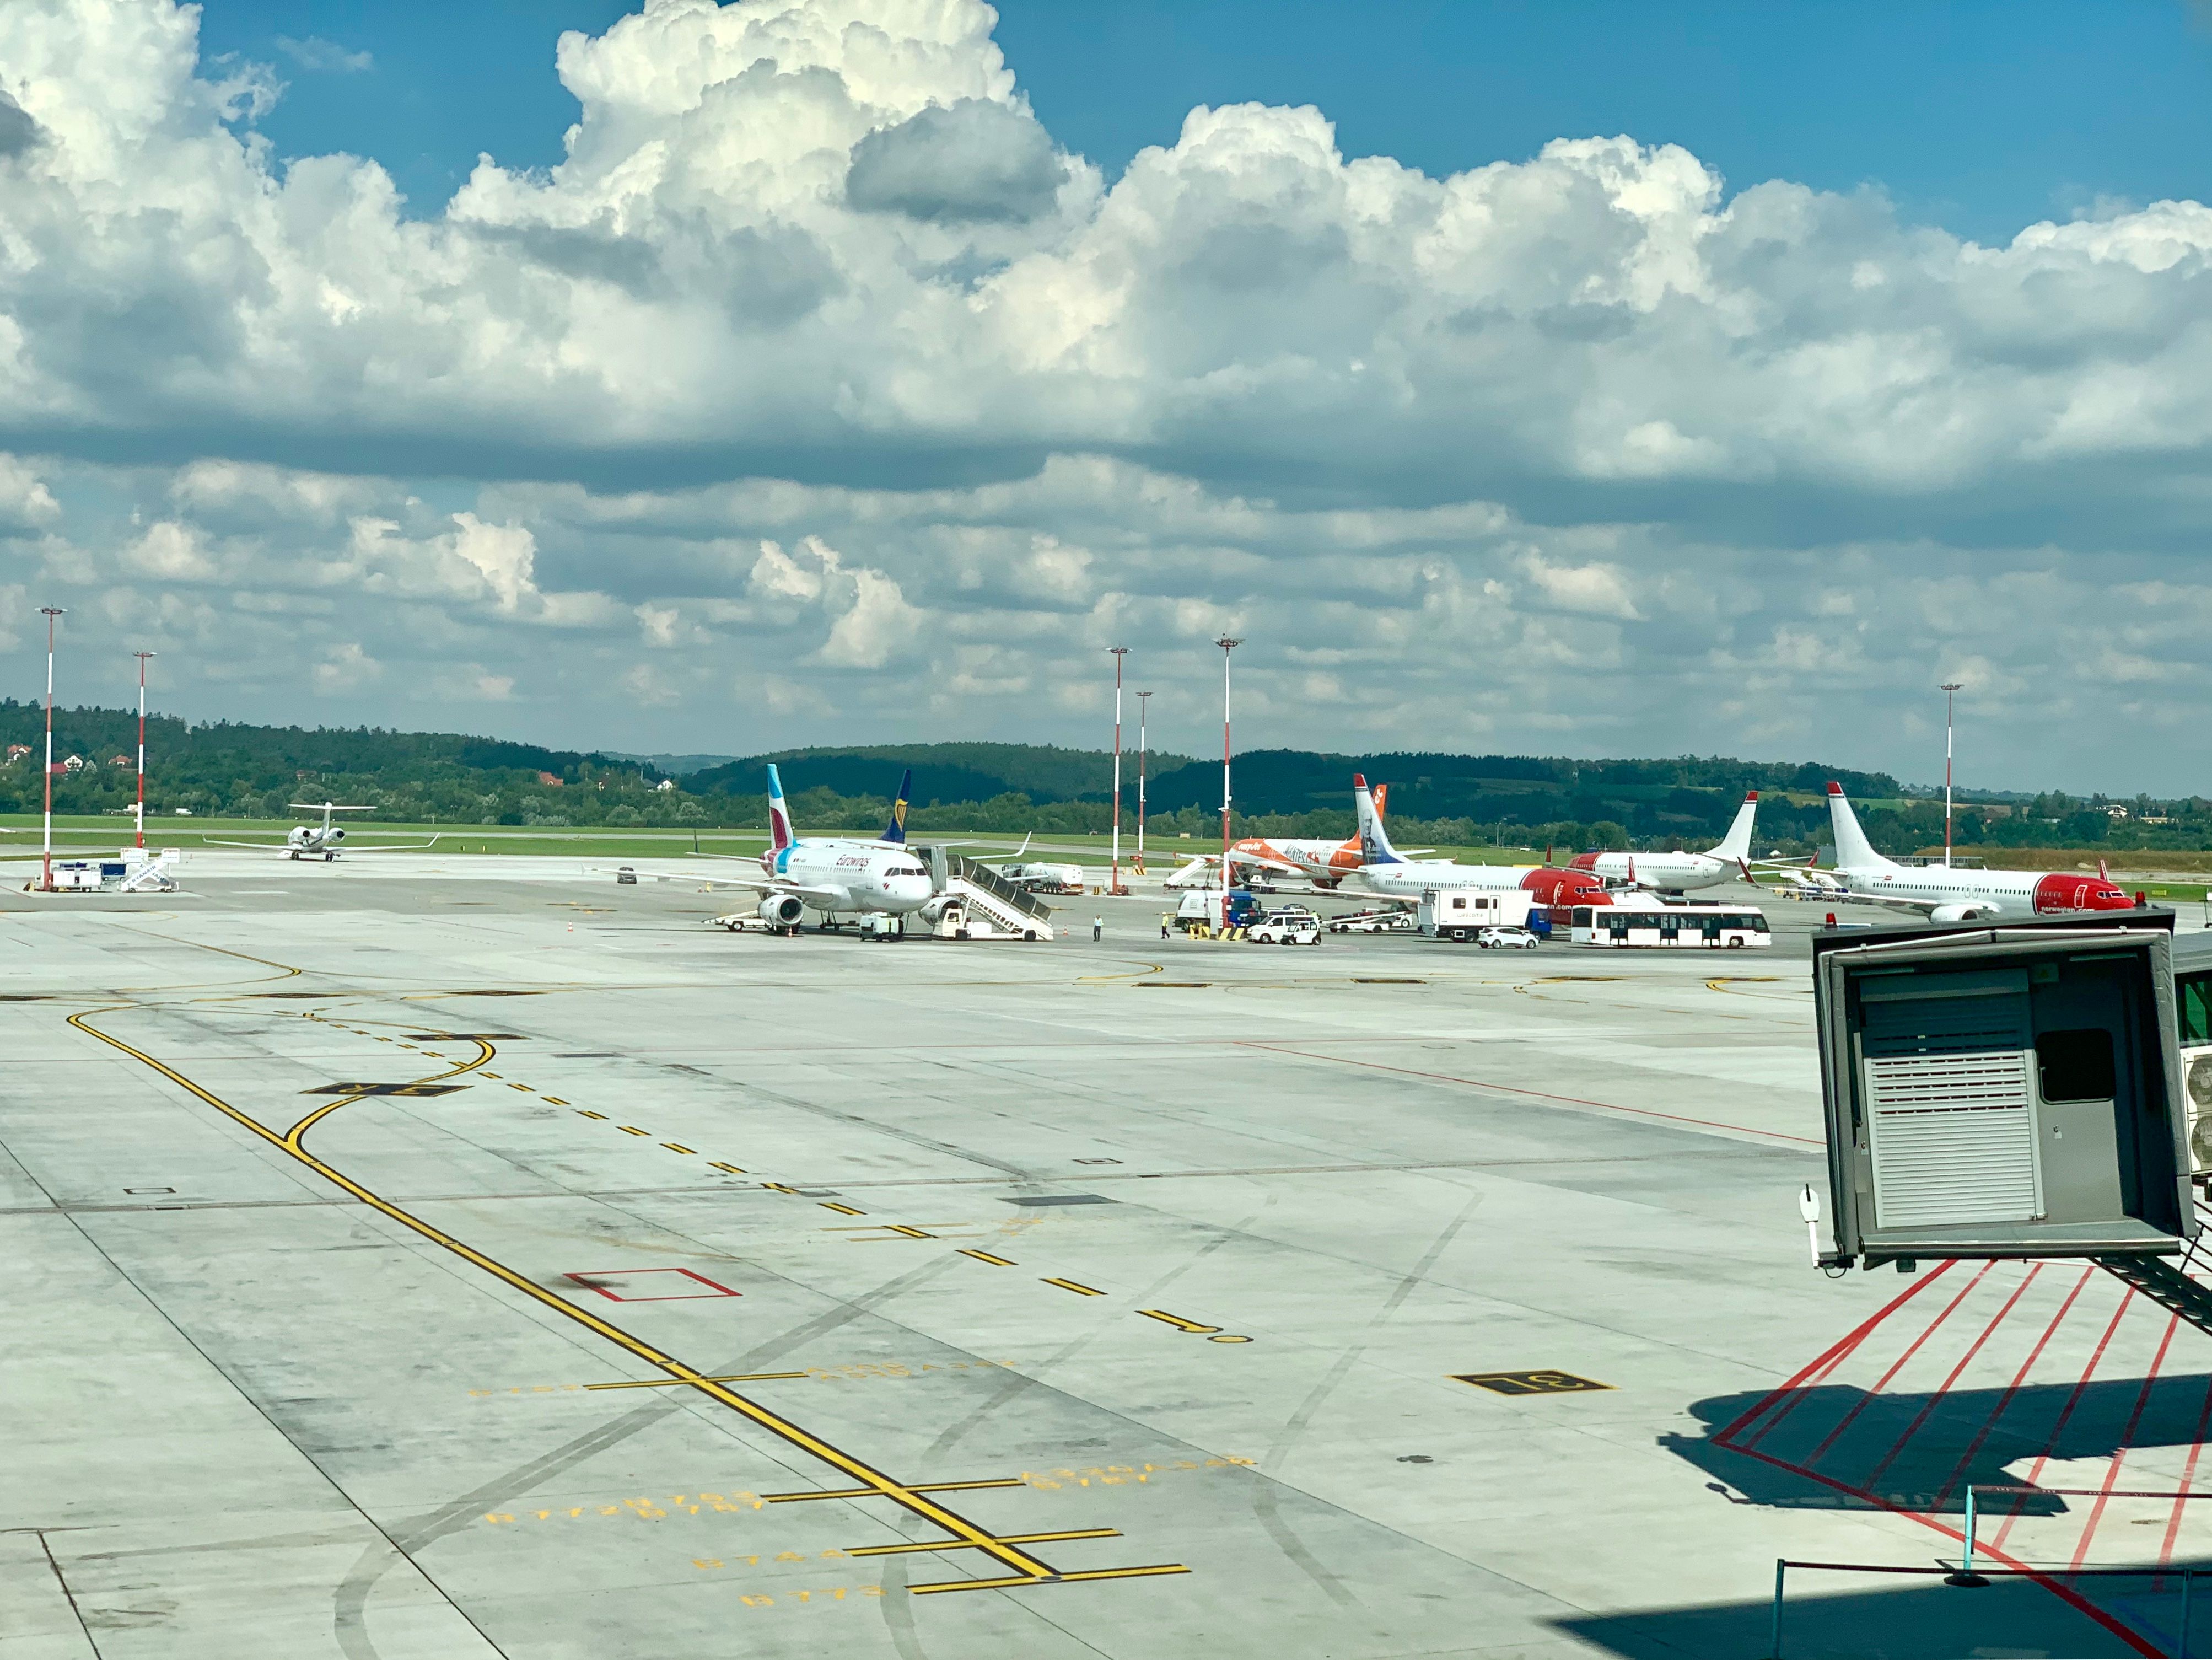 John_Paul_II_Airport_in_Balice-Kraków_tarmac_seen_from_airport_terminal,_Poland,_2019